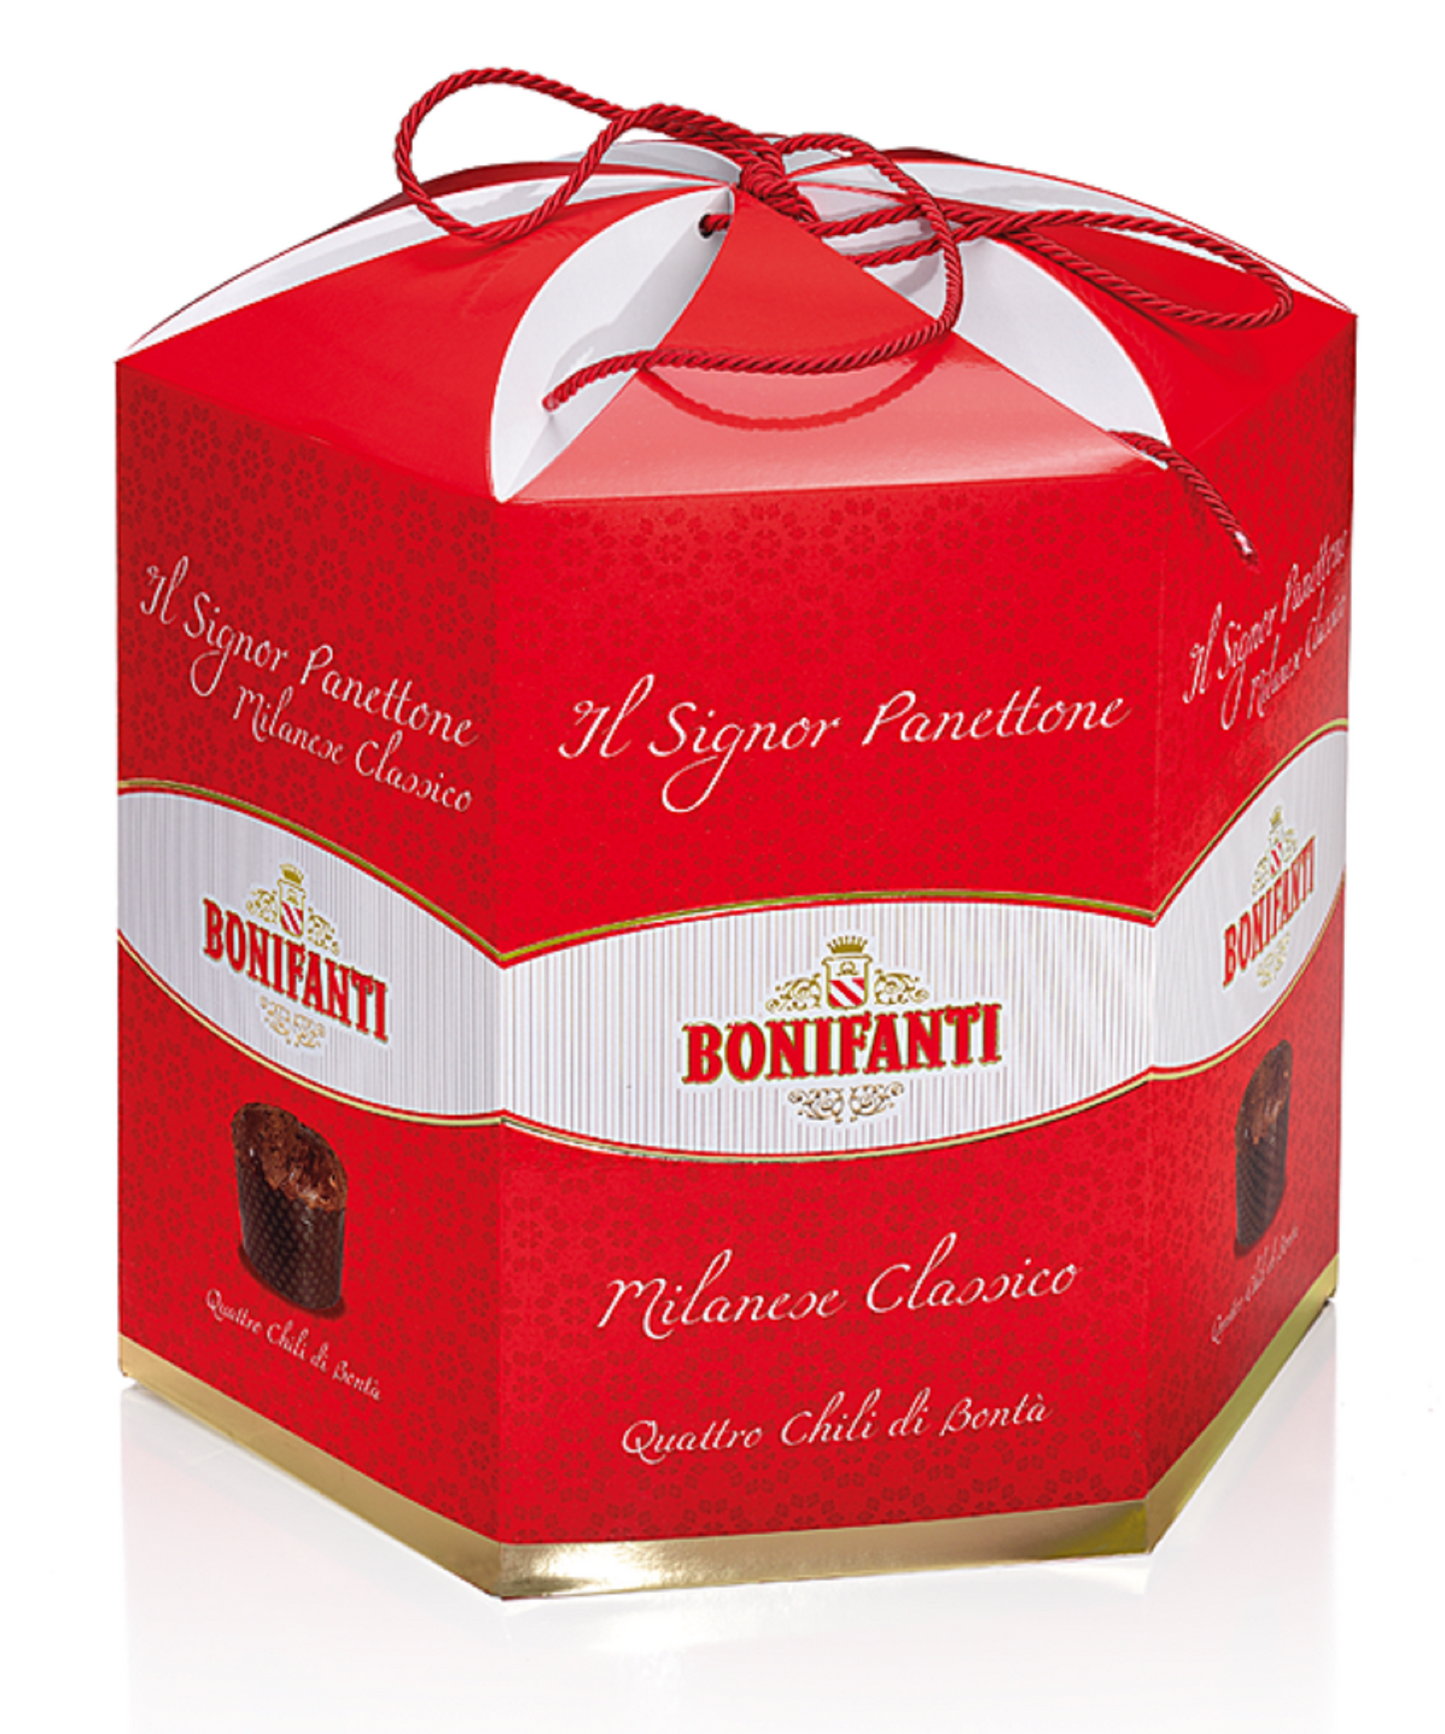 Bonifanti 'Il Signor' Panettone 4kg - Frankies Pantry and Cellar